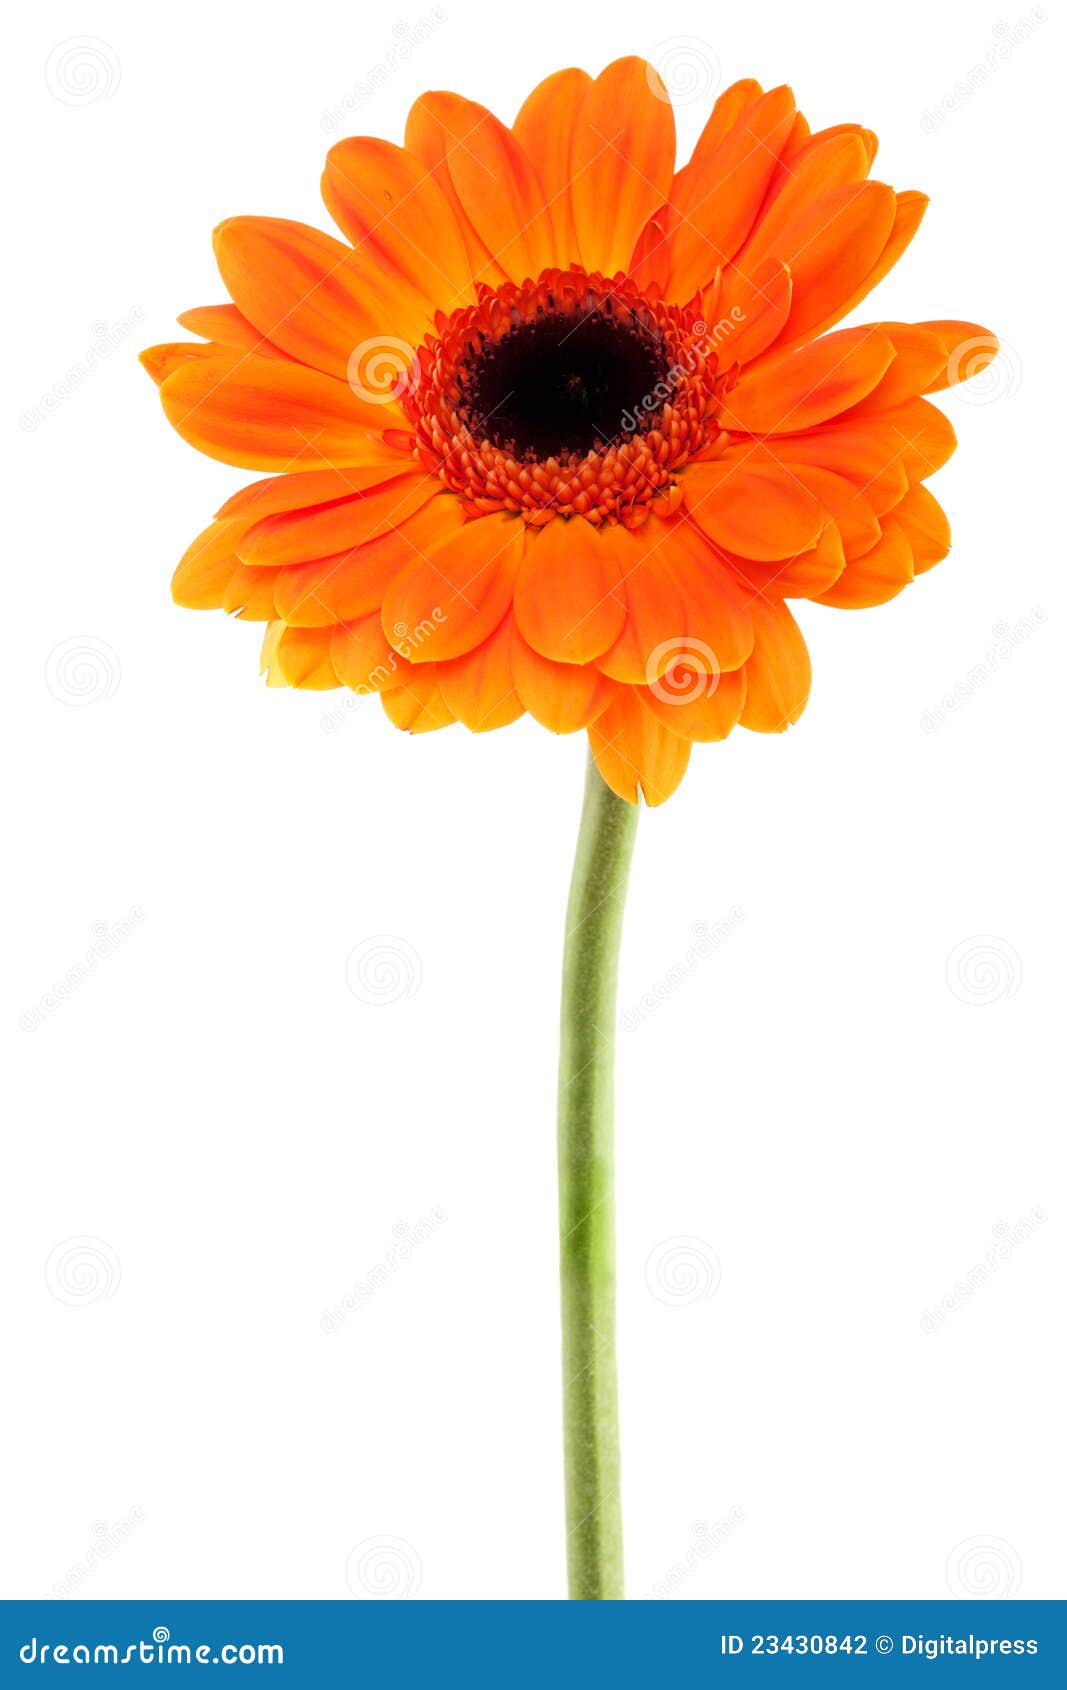 gerbera daisy orange